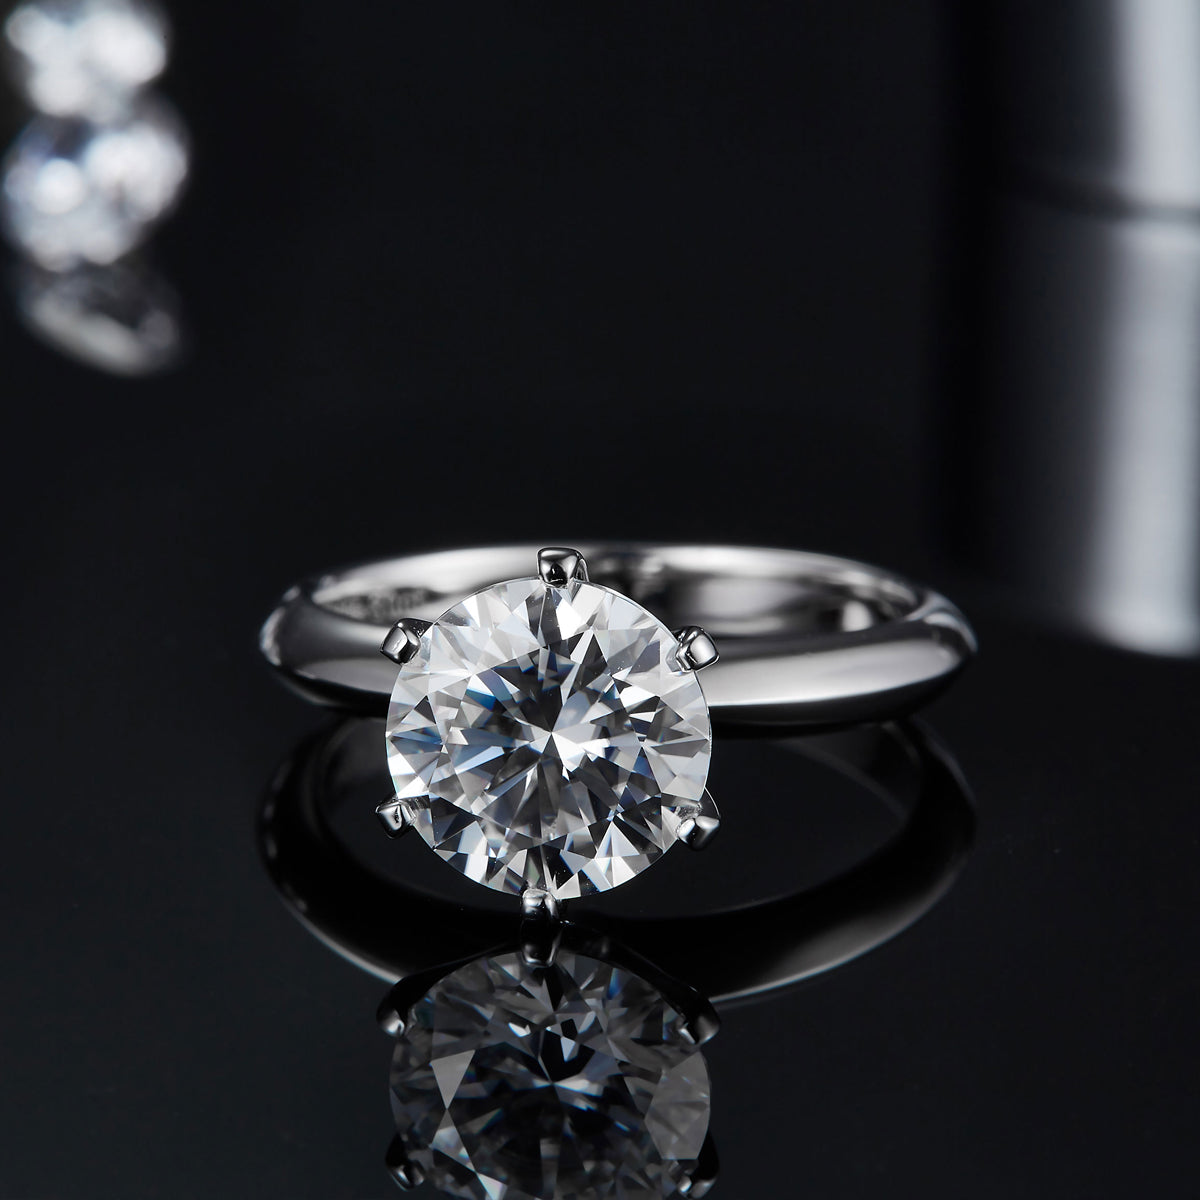 Moissanite engagement ring on sale